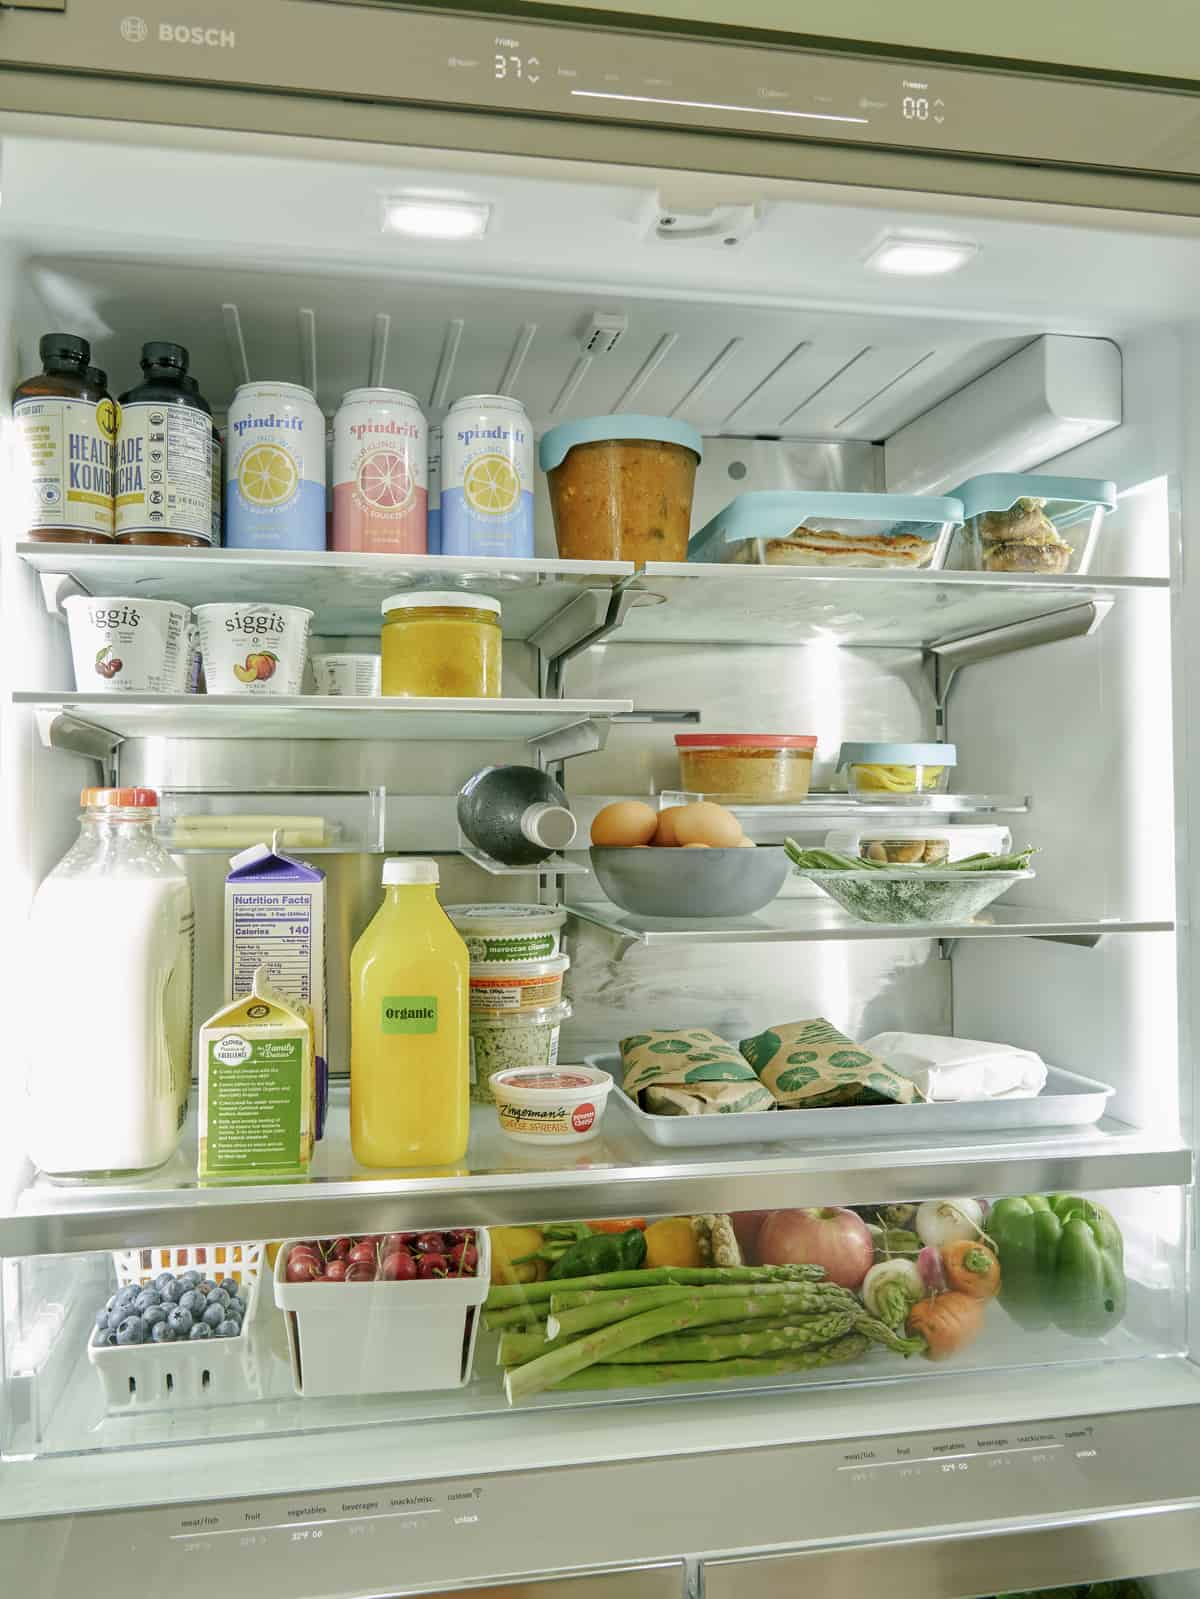 Freezer Organization - This Simple Home